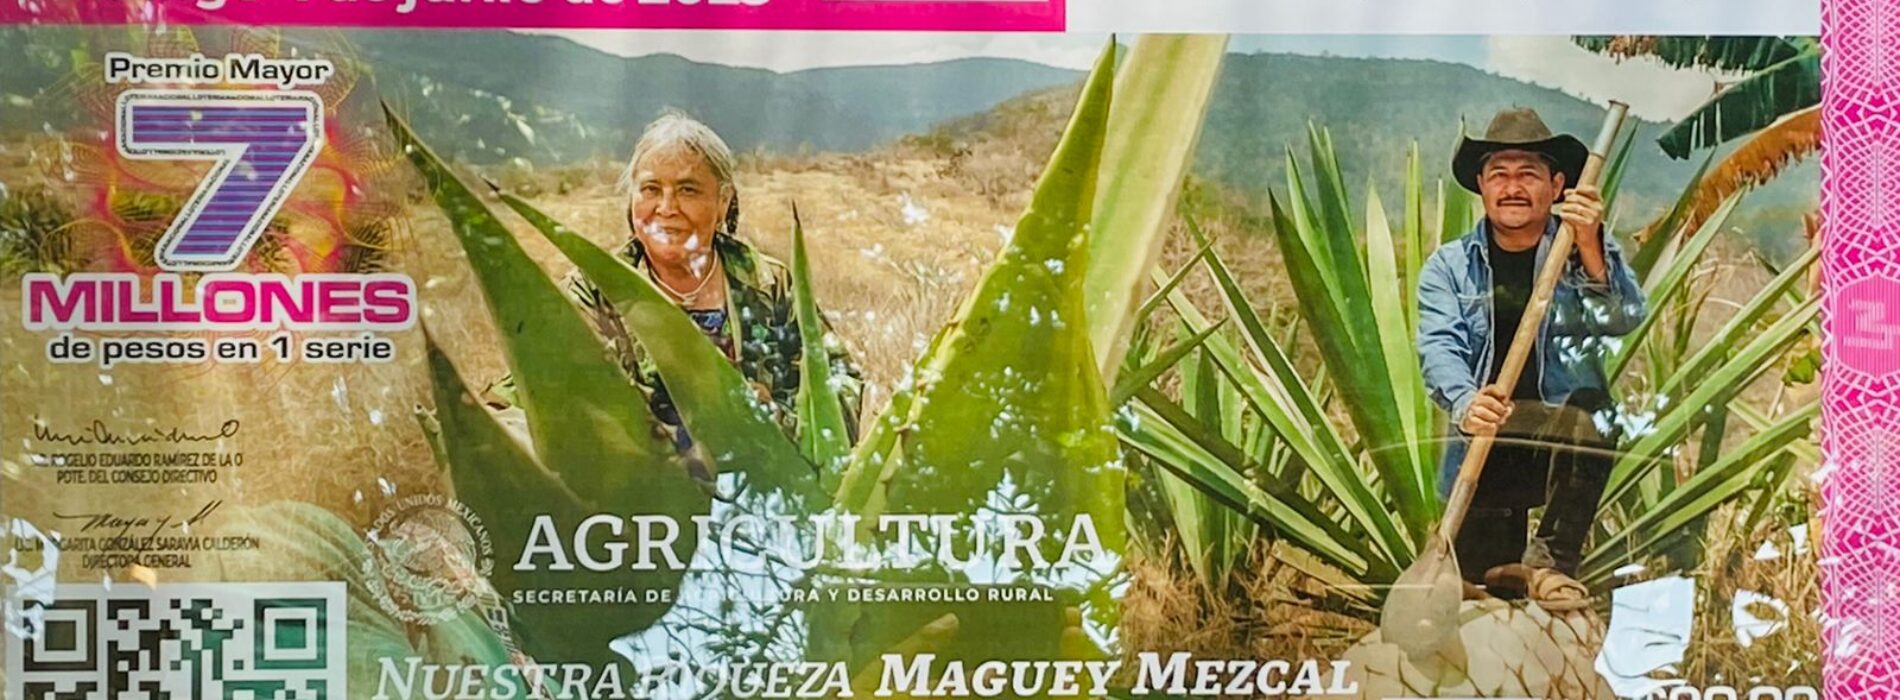 Devela Lotería Nacional billete alusivo al Maguey-Mezcal